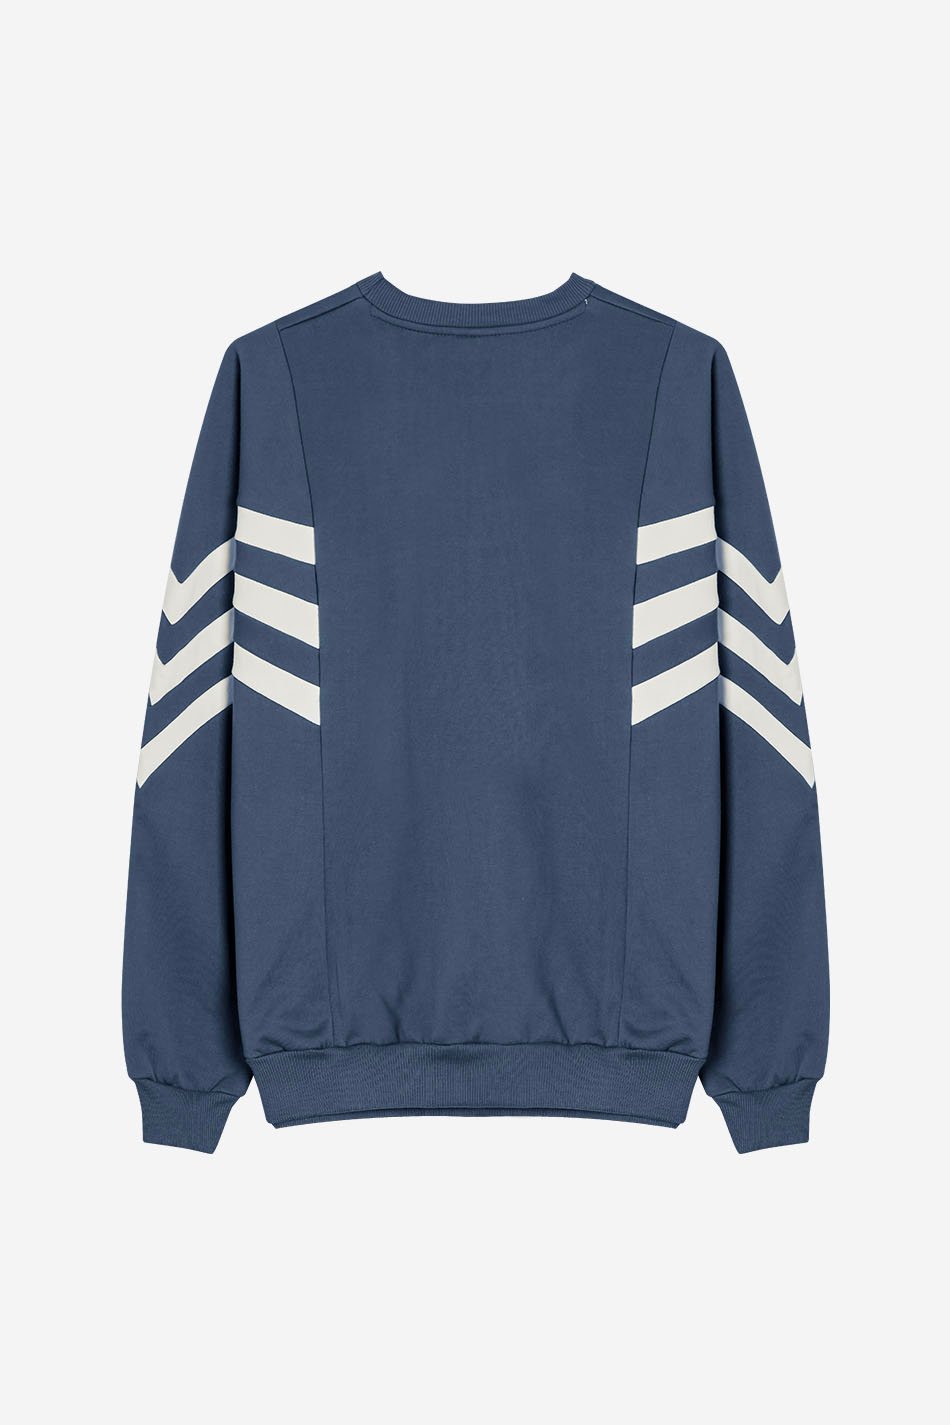 Prussian / Ivory Chad Sweatshirt